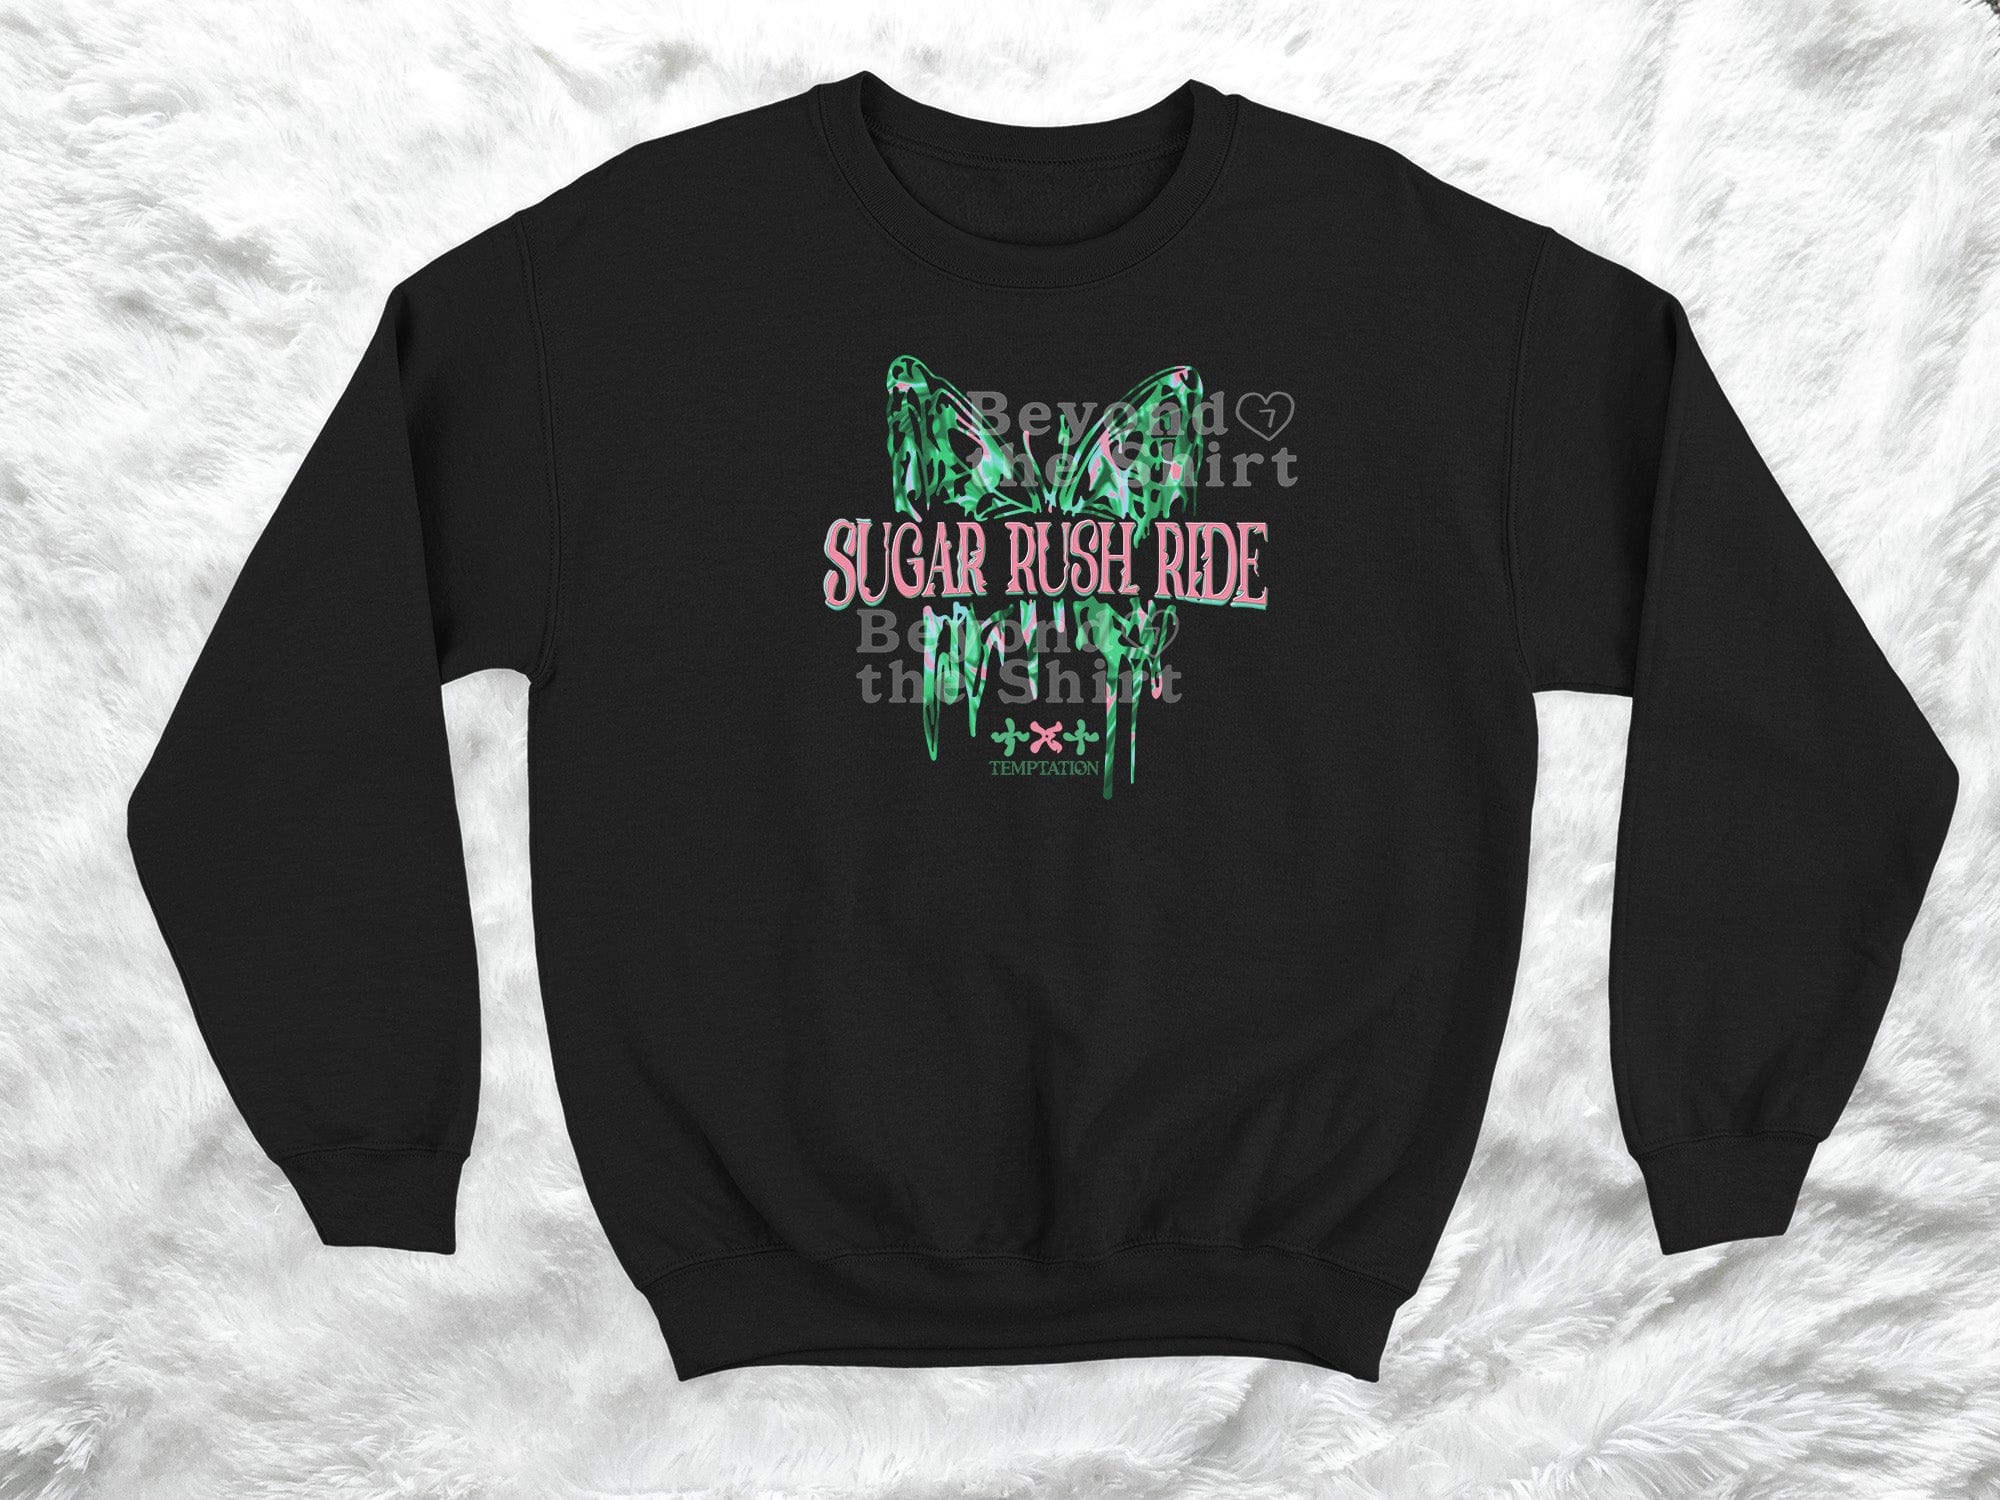 TXT Sugar Rush Ride Shirts and Sweatshirts